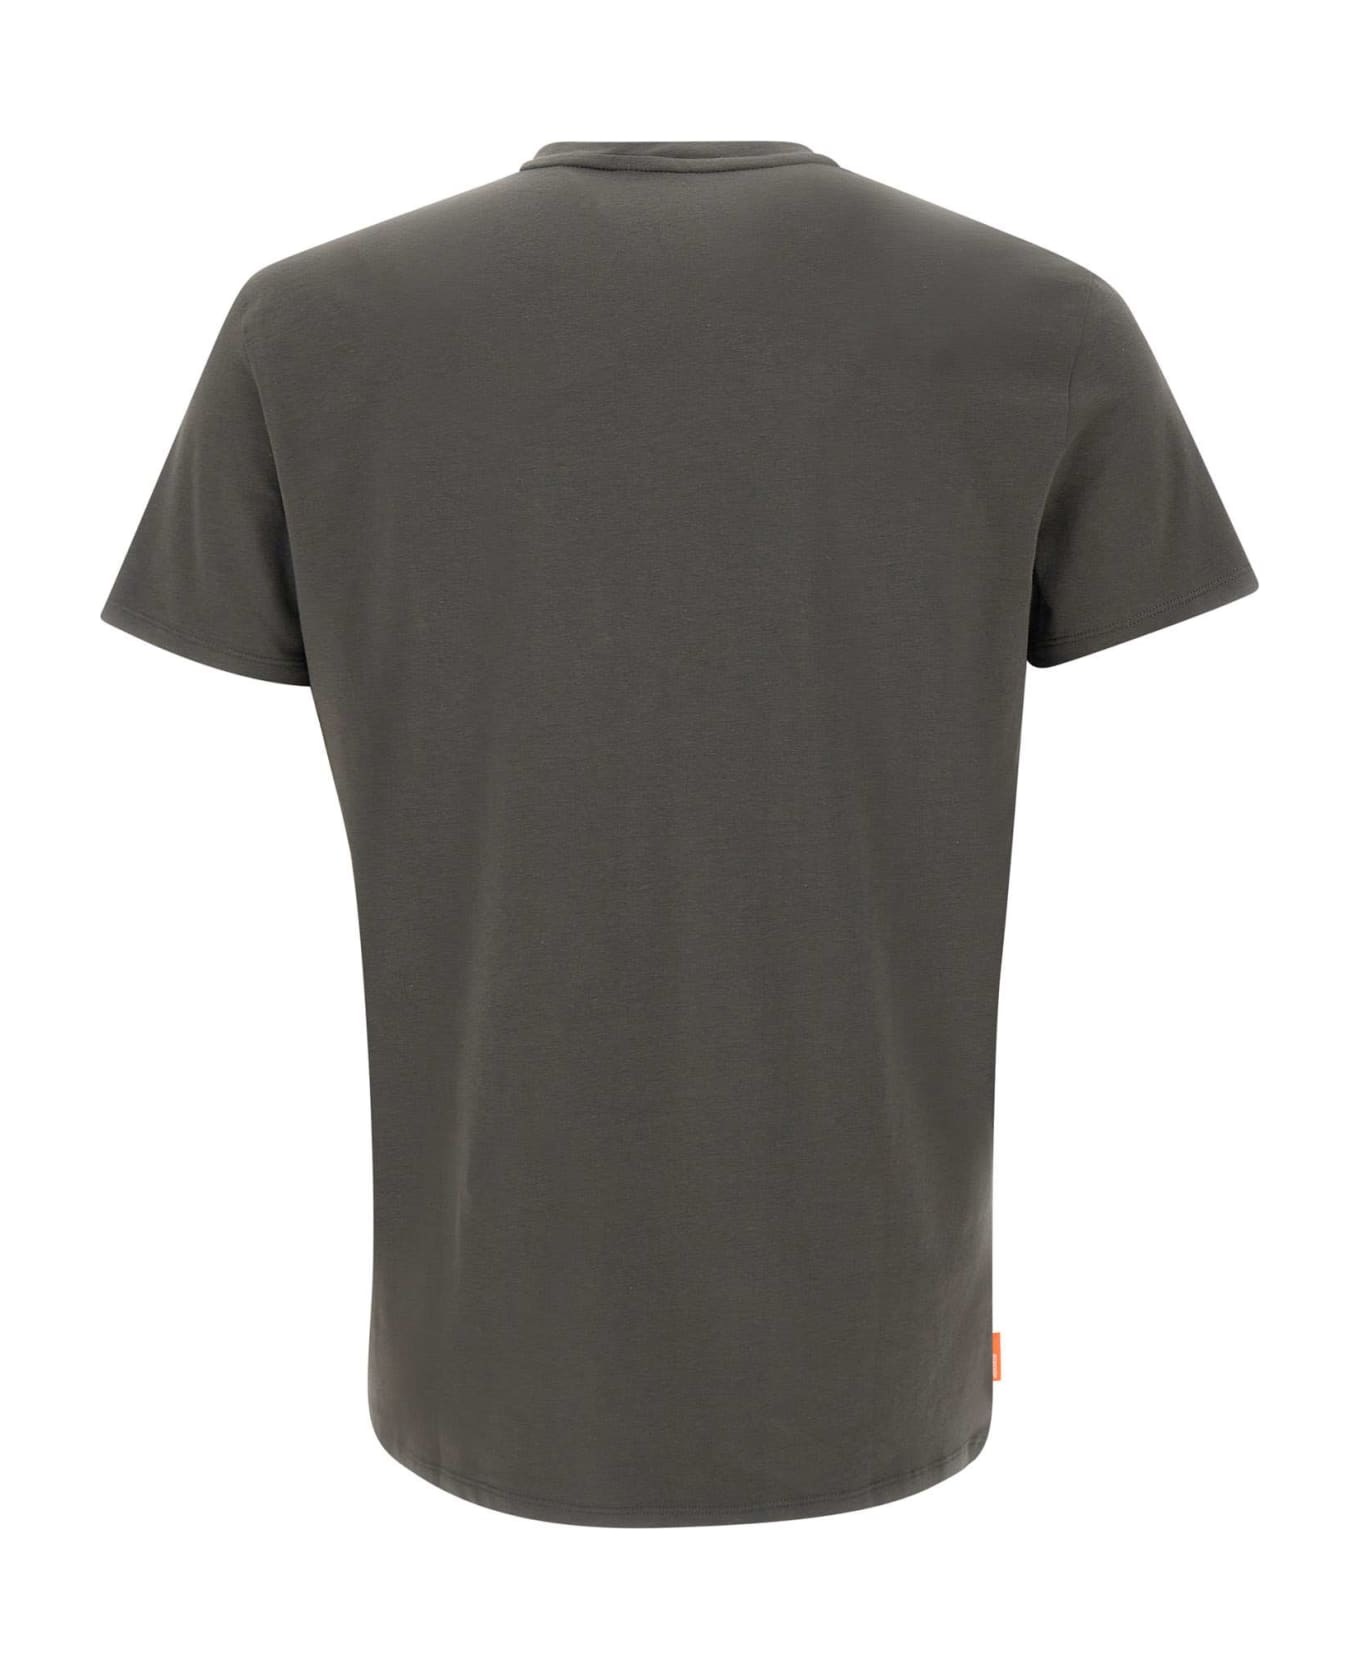 RRD - Roberto Ricci Design "revo Shirty" T-shirt - GREEN